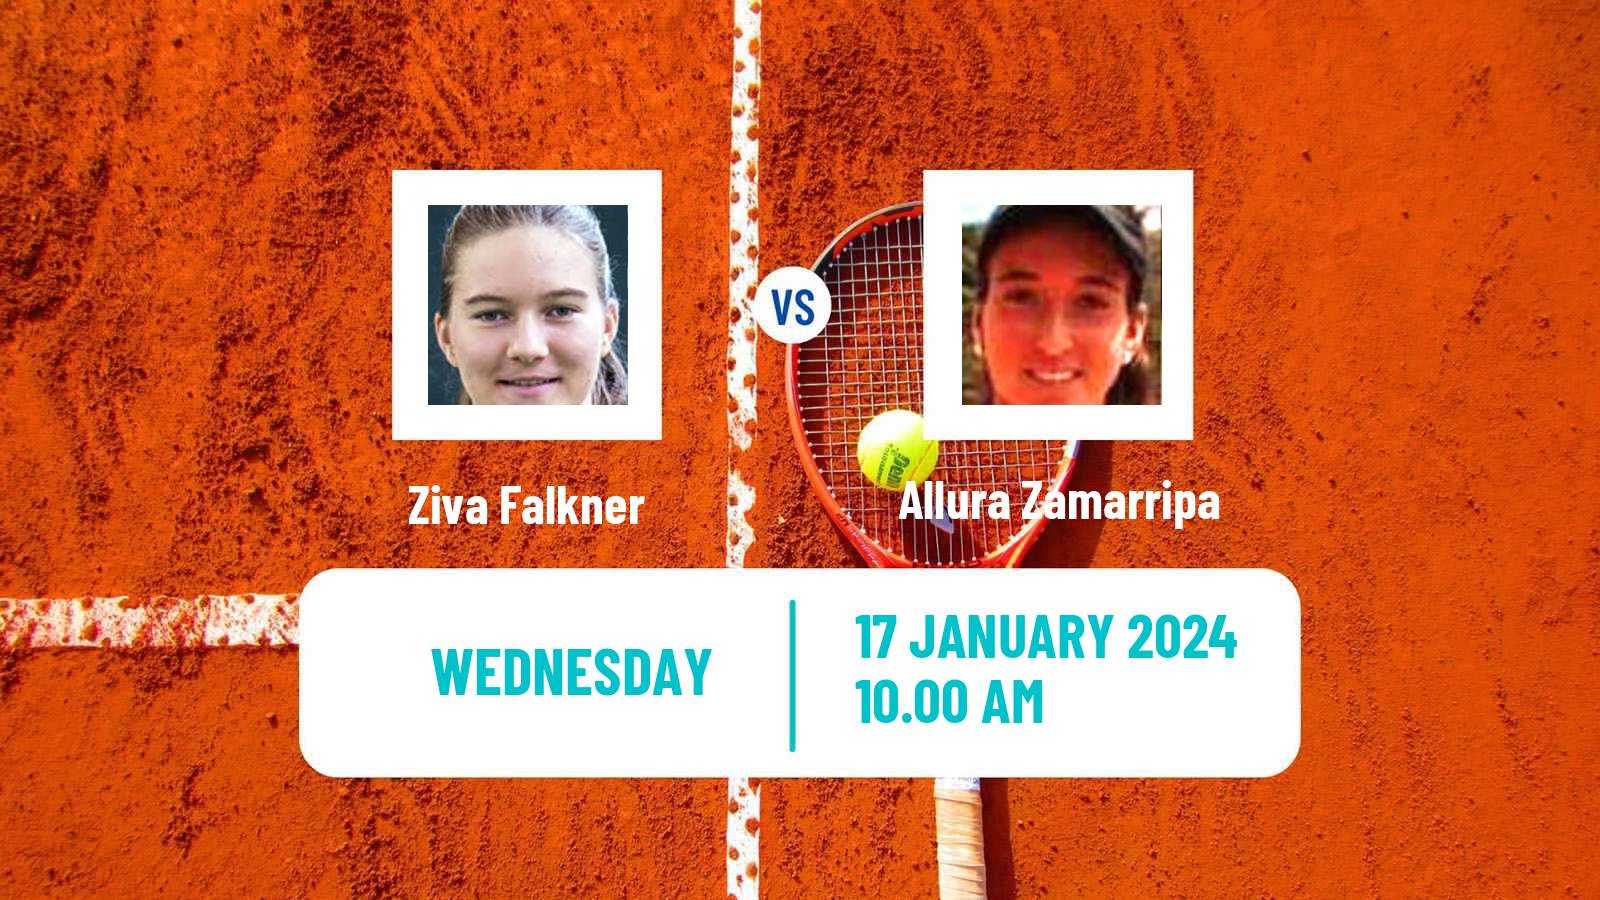 Tennis ITF W35 Naples Fl 2 Women Ziva Falkner - Allura Zamarripa